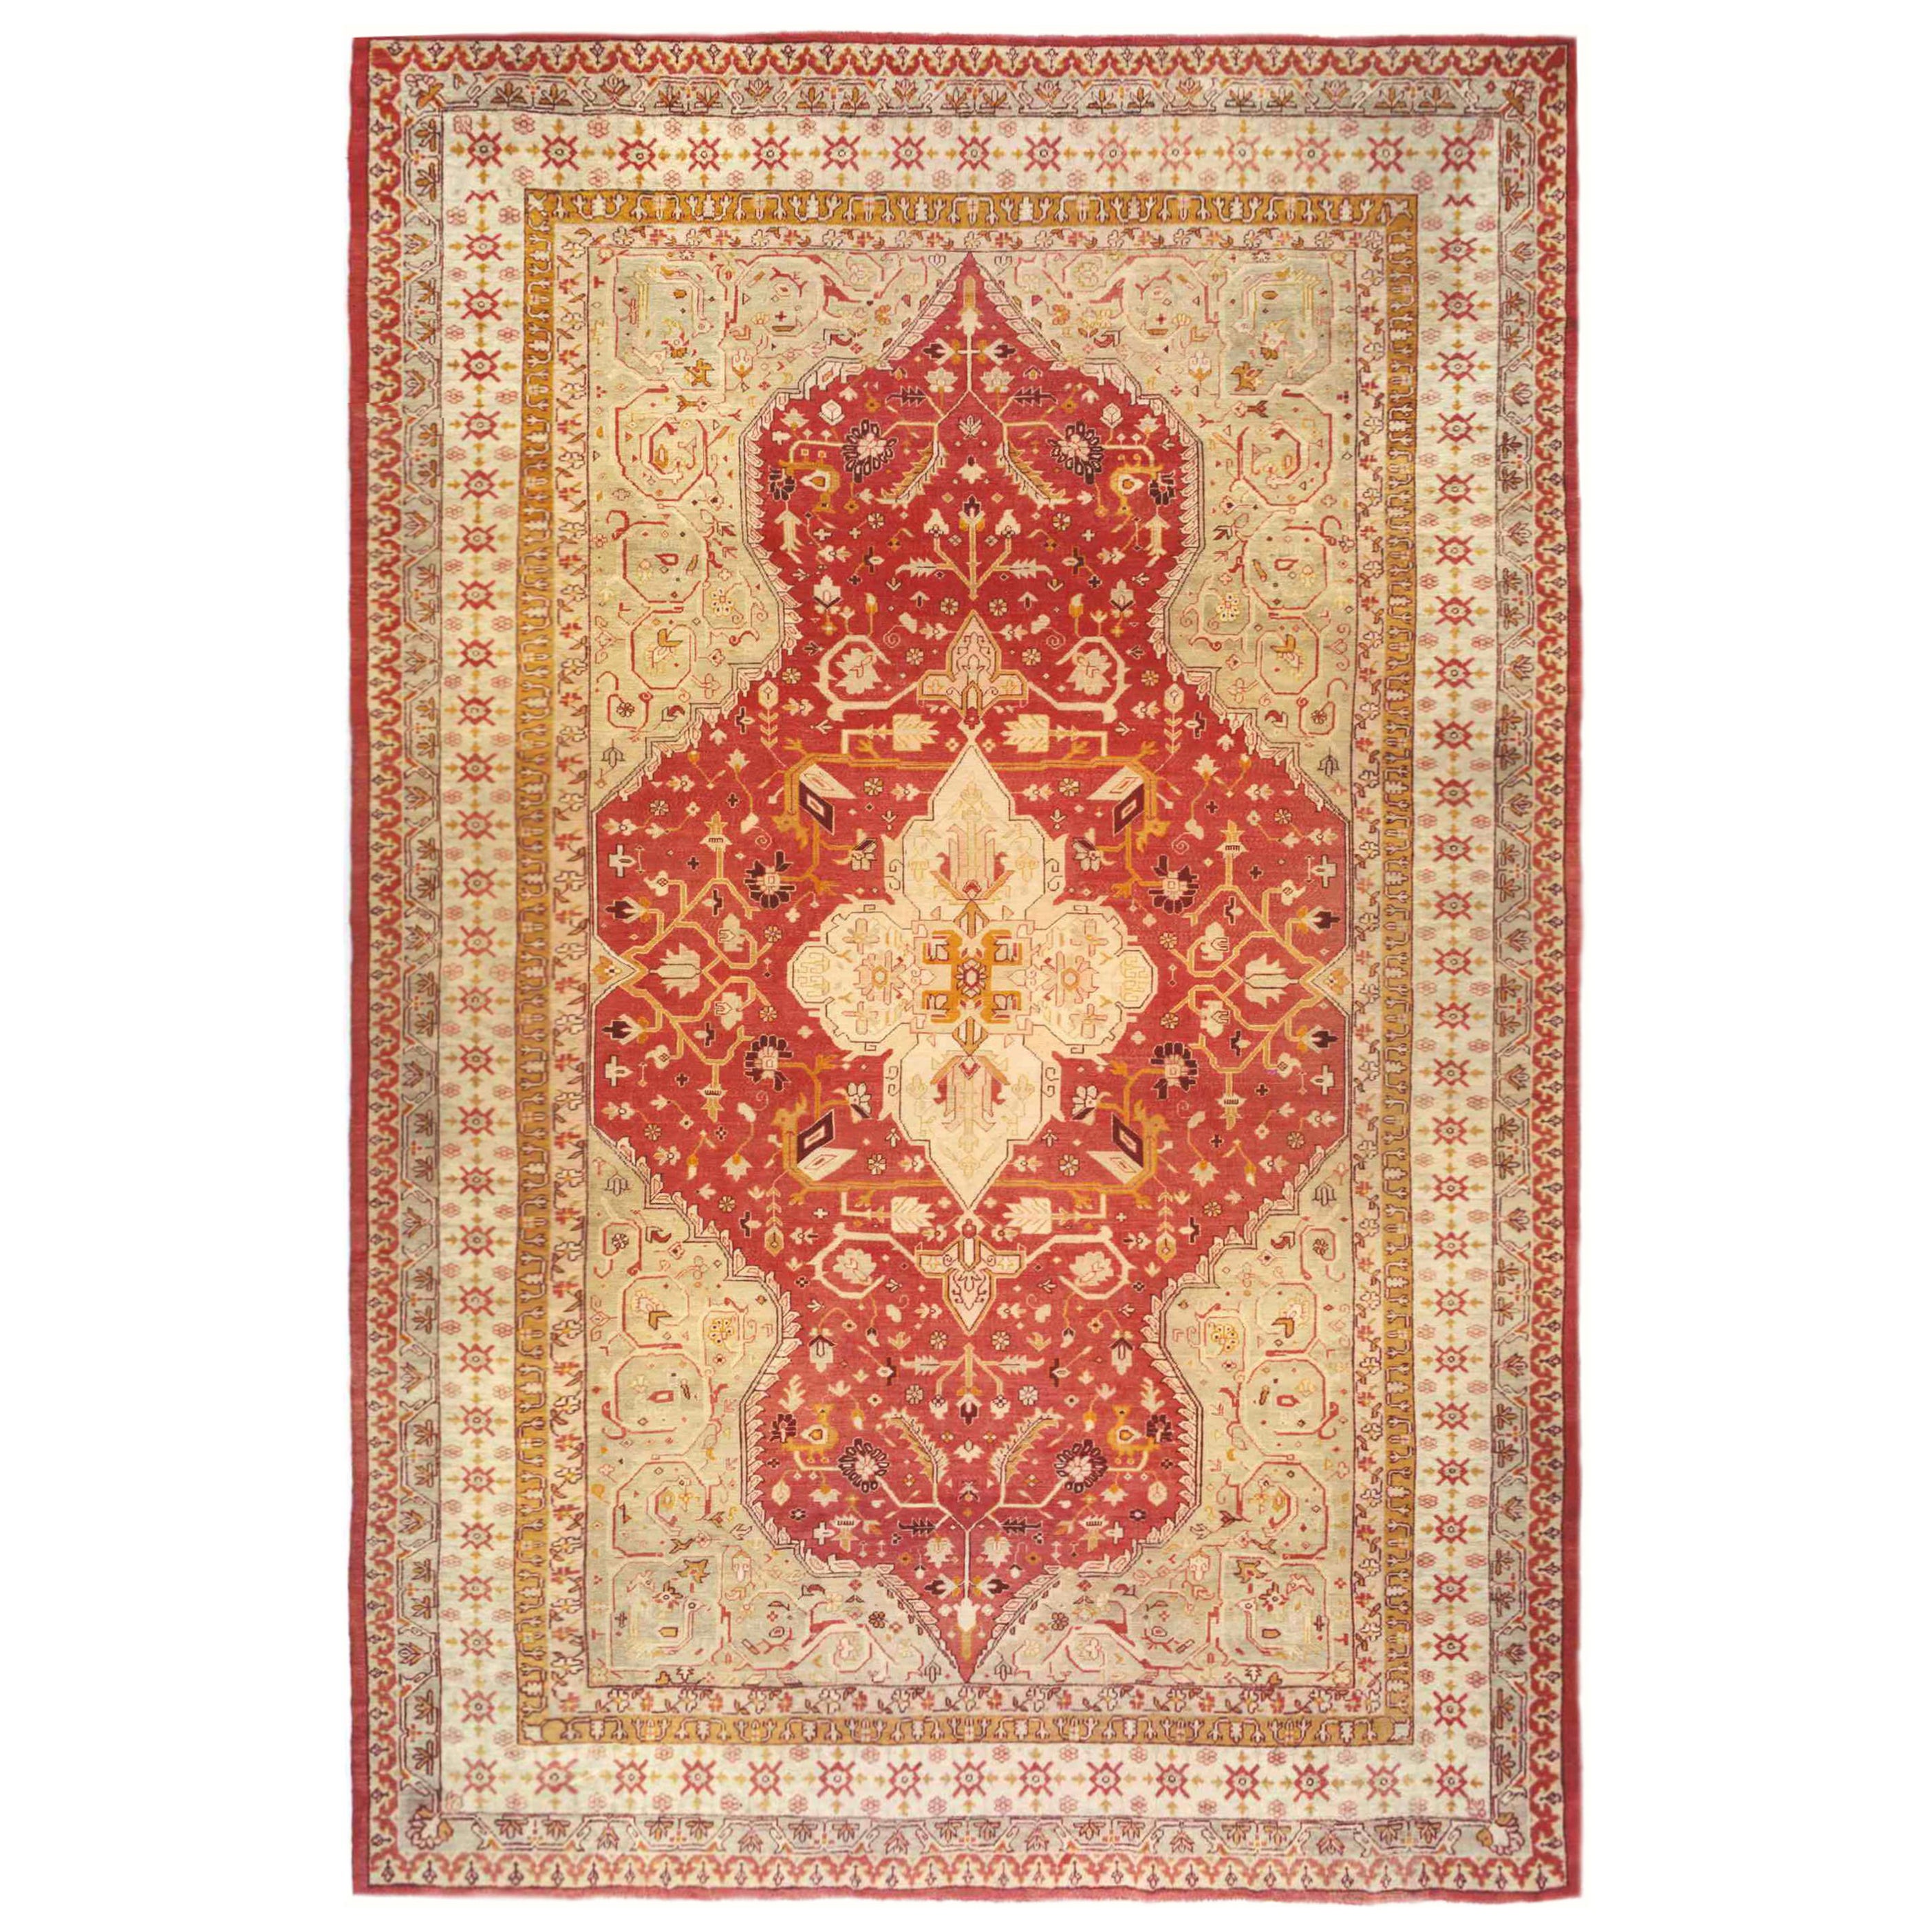 Antique Turkish Oushak Oriental Carpet, Oversize, with Medallion & Corner Design